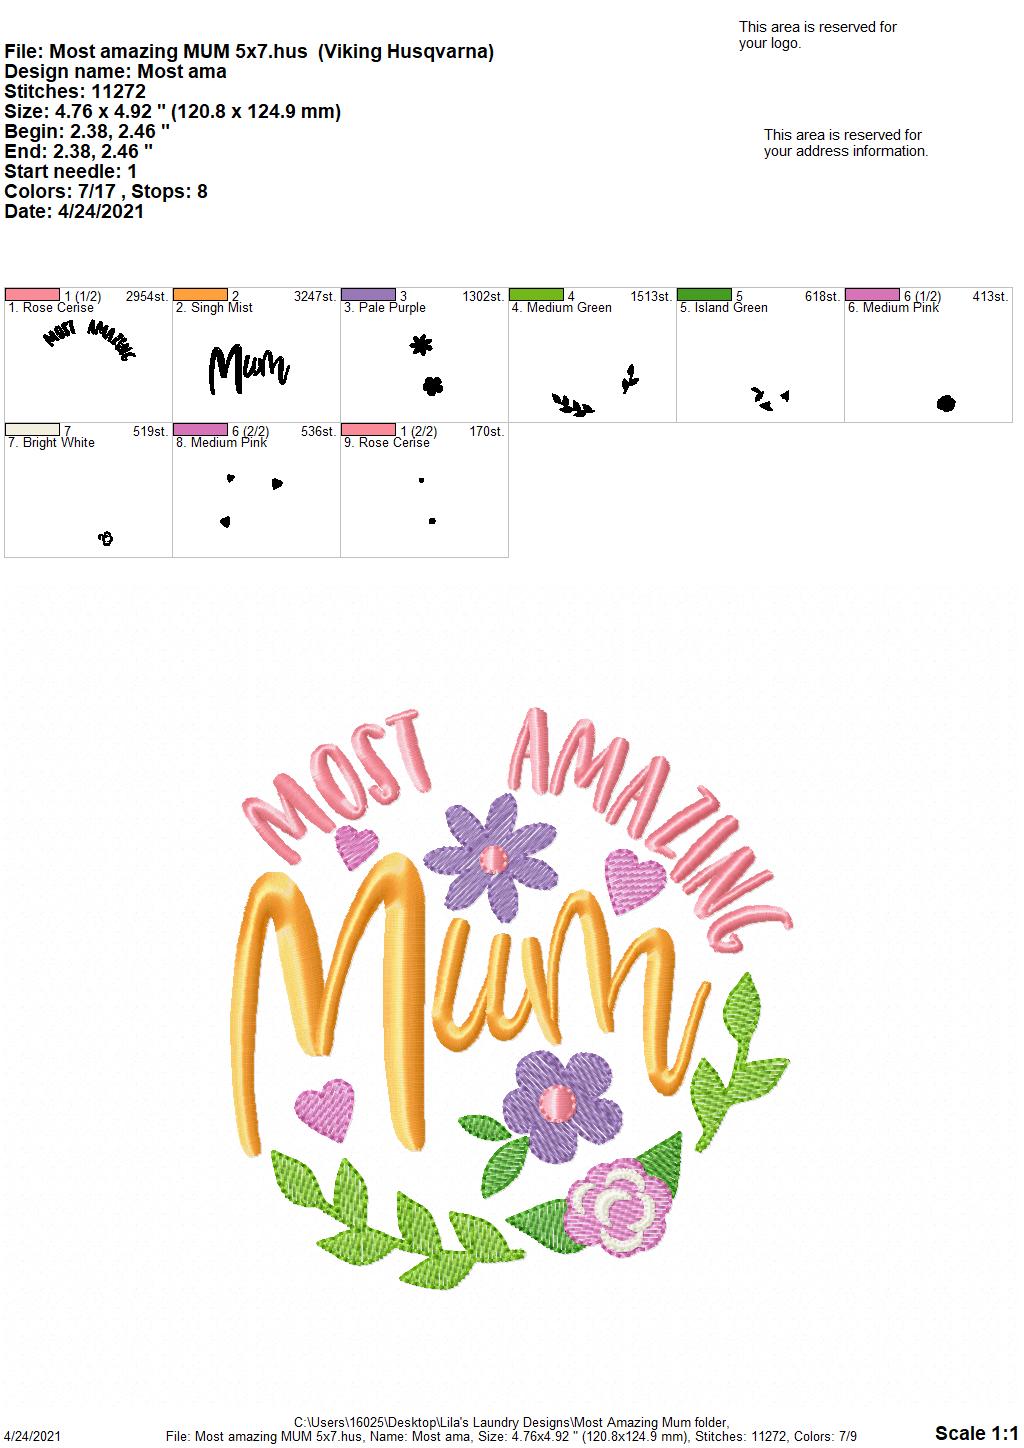 Most Amazing Mum - 2 sizes- Digital Embroidery Design